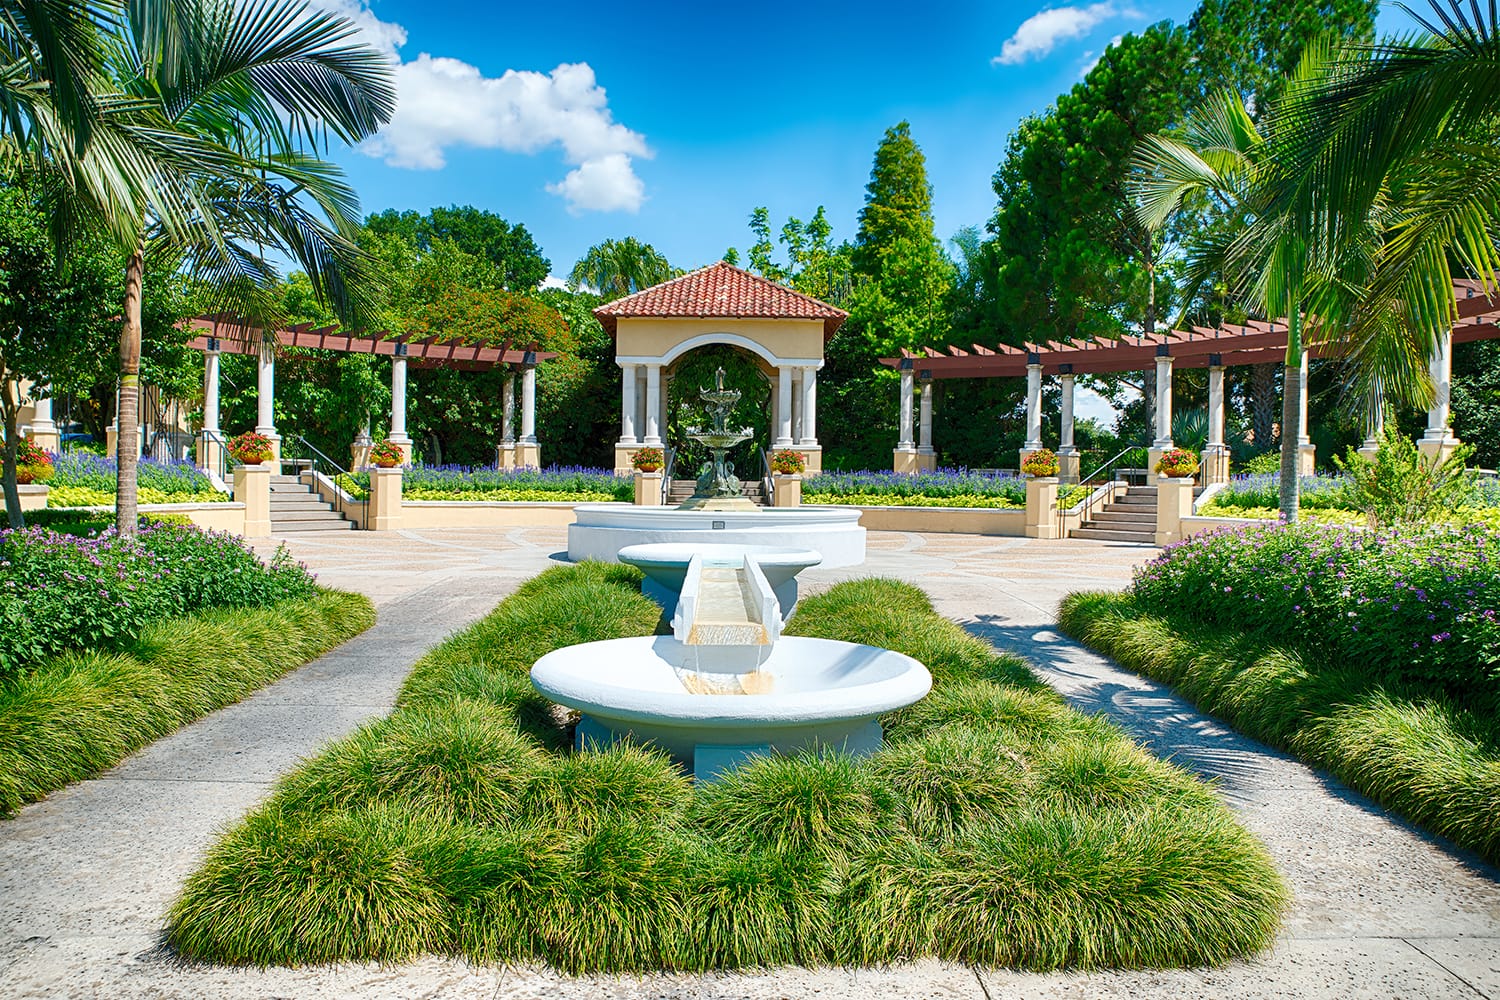 Fountain at Hollis Park in Lakeland, Florida, USA